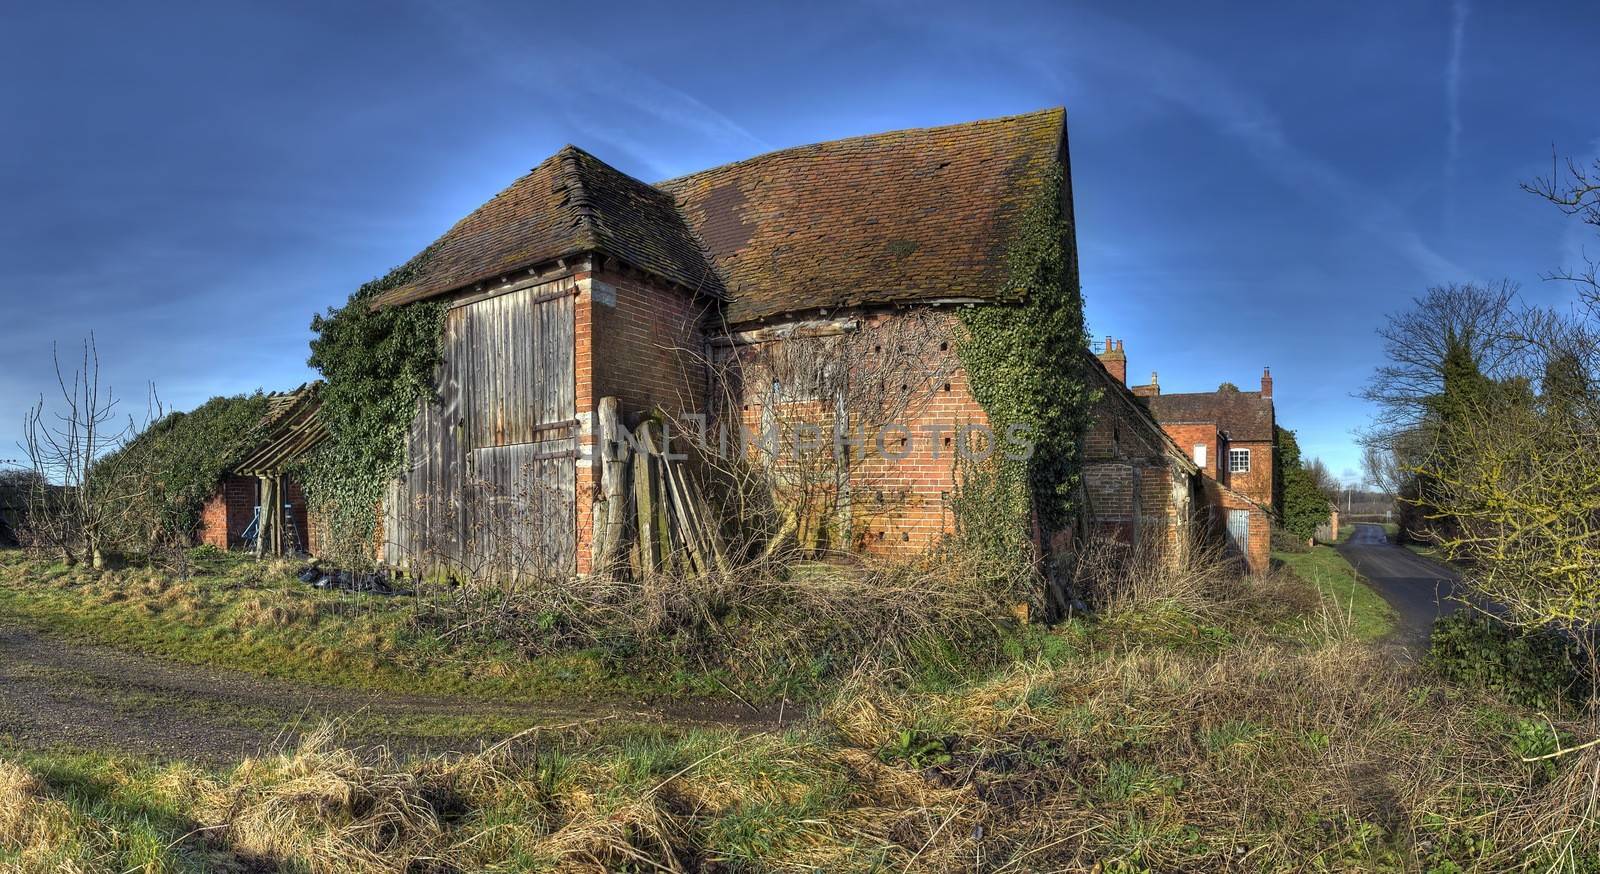 Overgrown and derelict hay barn, Warwickshire, England.